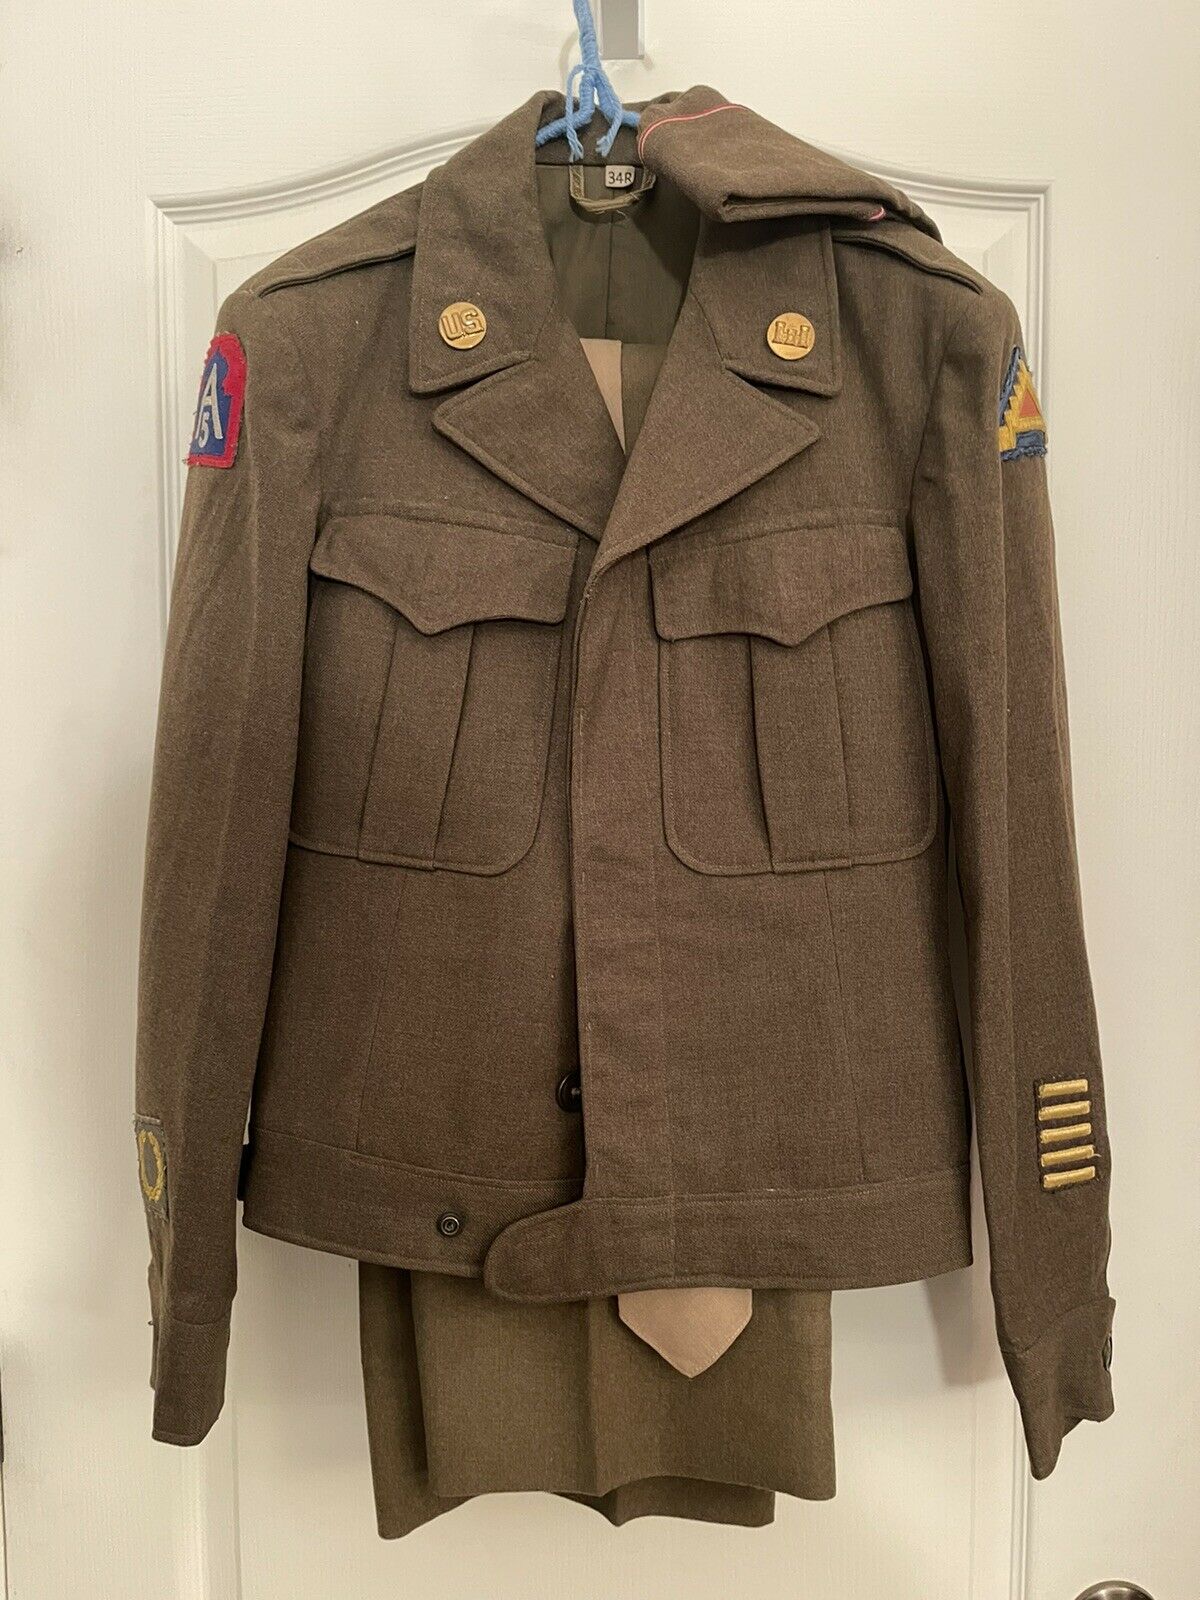 Ww2 Us Army Ike Jacket Uniform Set 7th Army Engineer